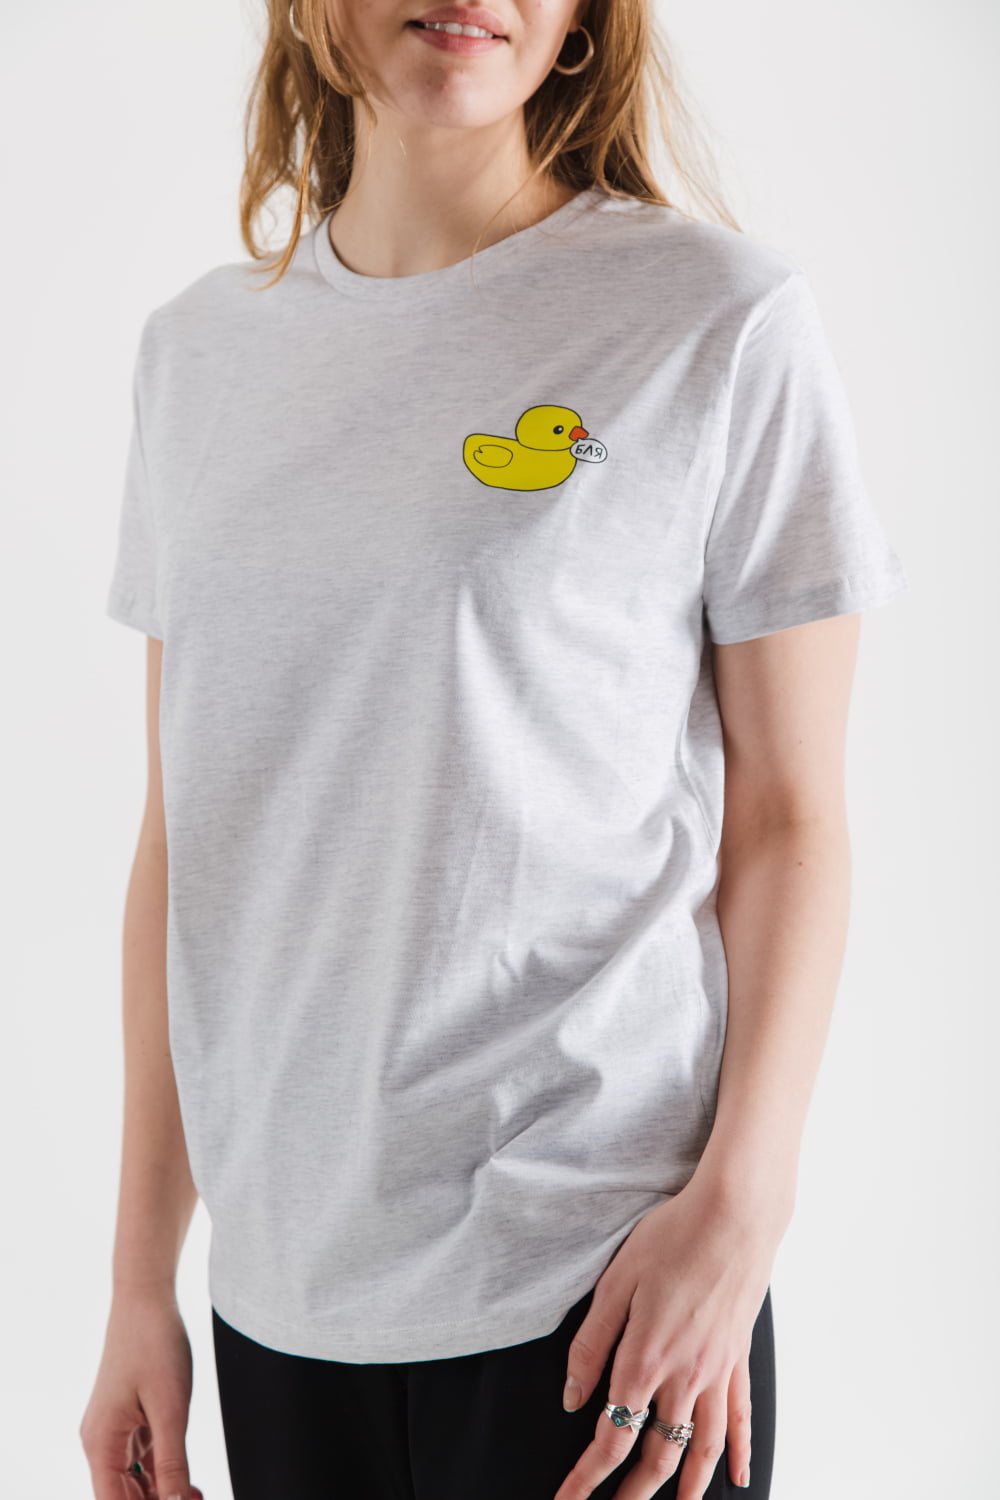 Schastia Zdorovia T-shirt "Duck" | Grey